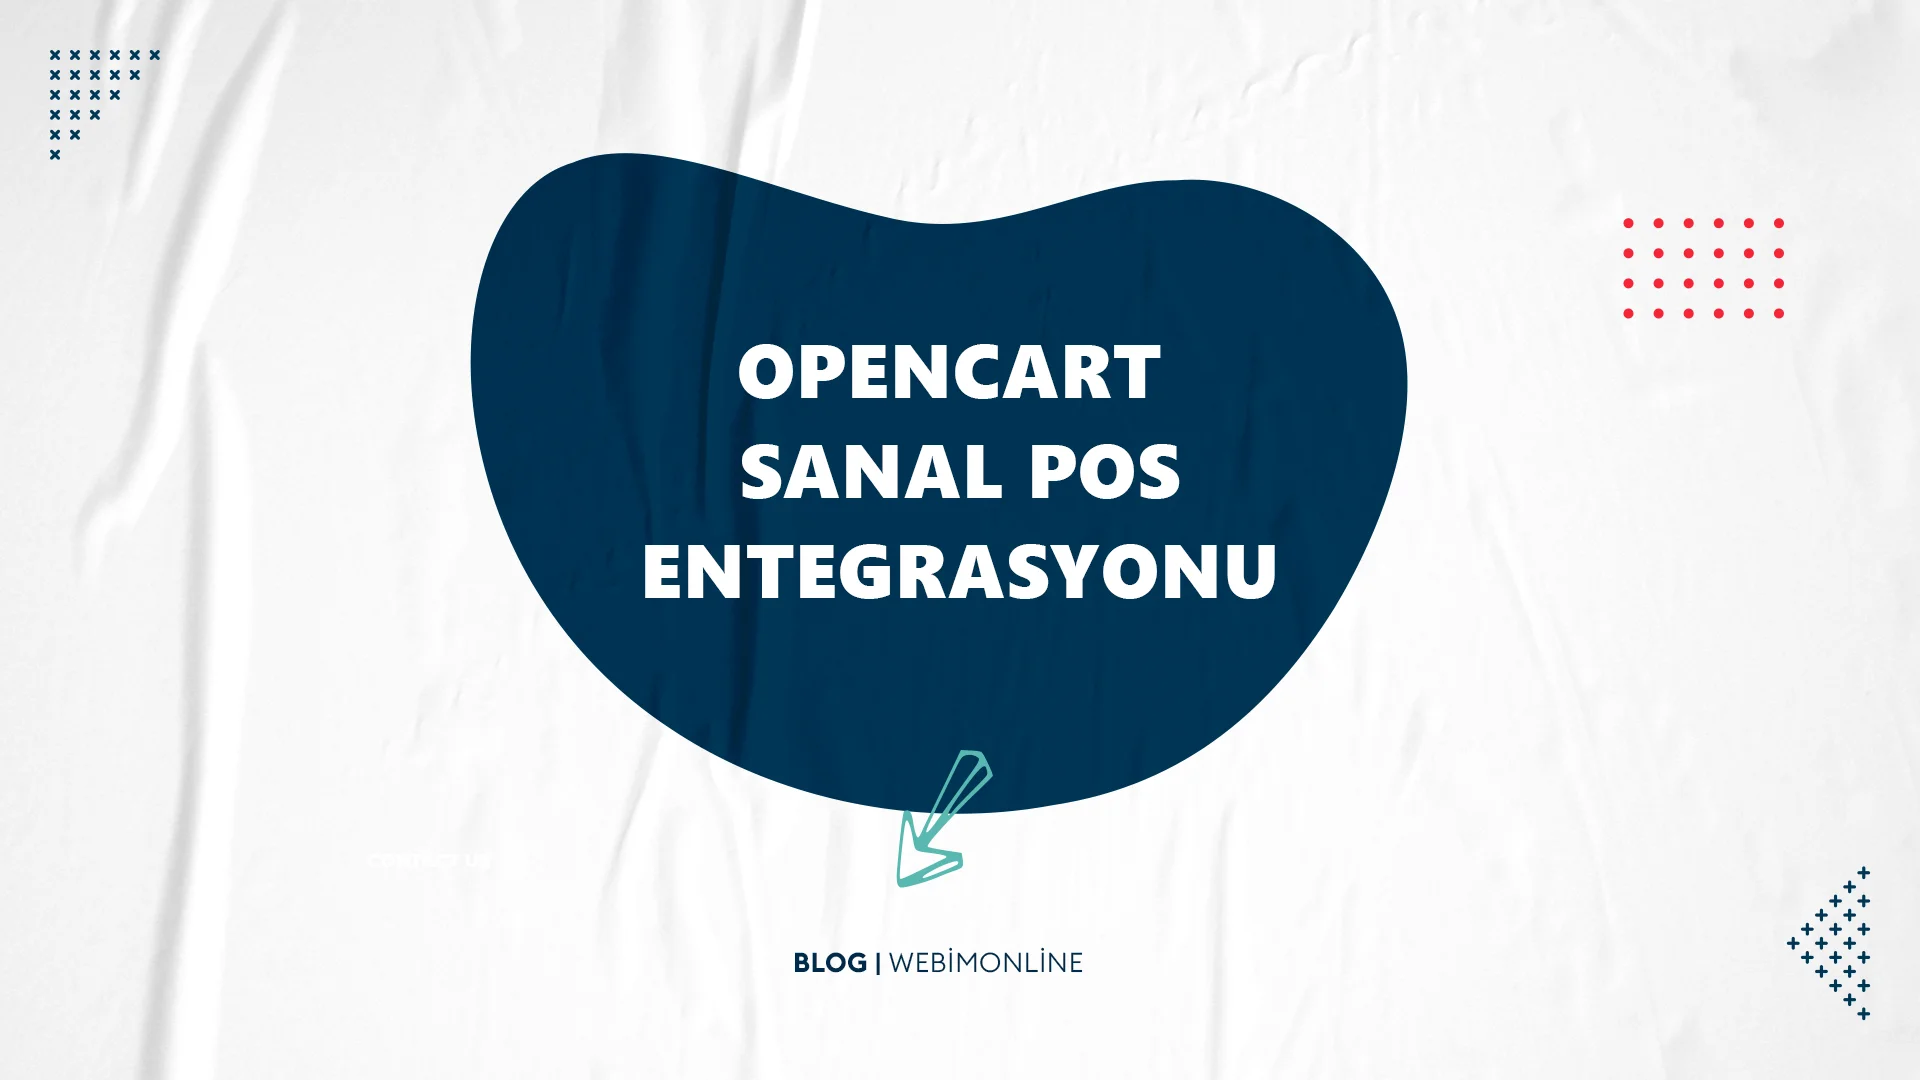 OpenCart Sanal Pos Entegrasyonu